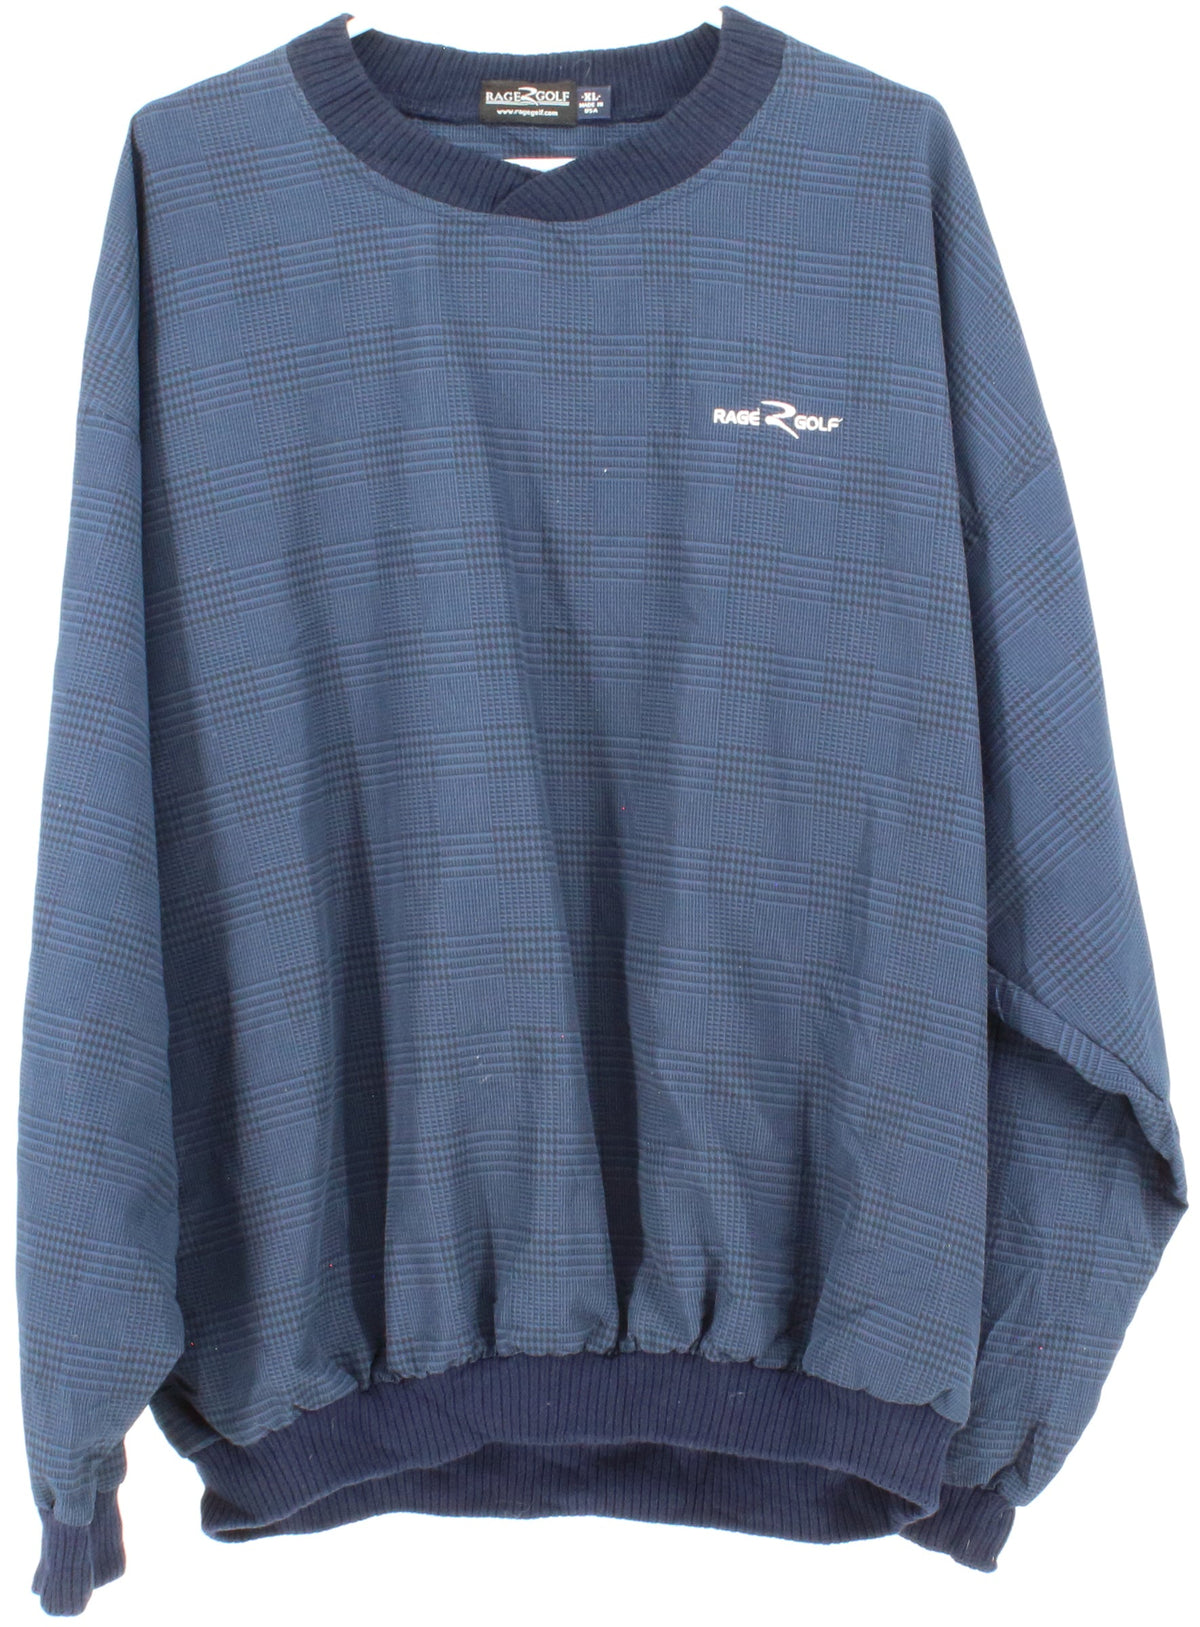 Rage Golf Navy Blue Plaid Jacket